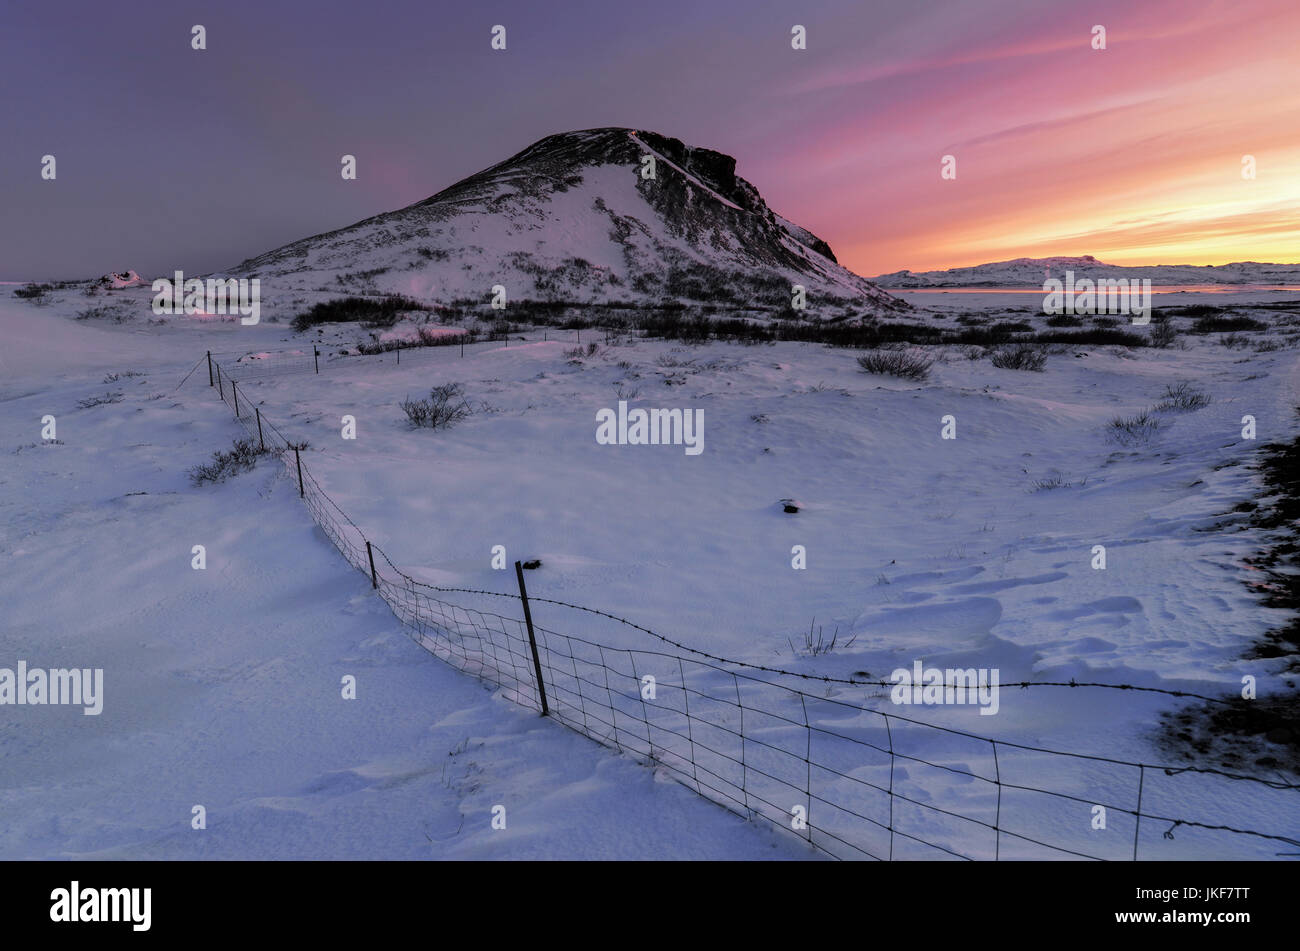 Iceland, Snowy landscape at sunset Stock Photo